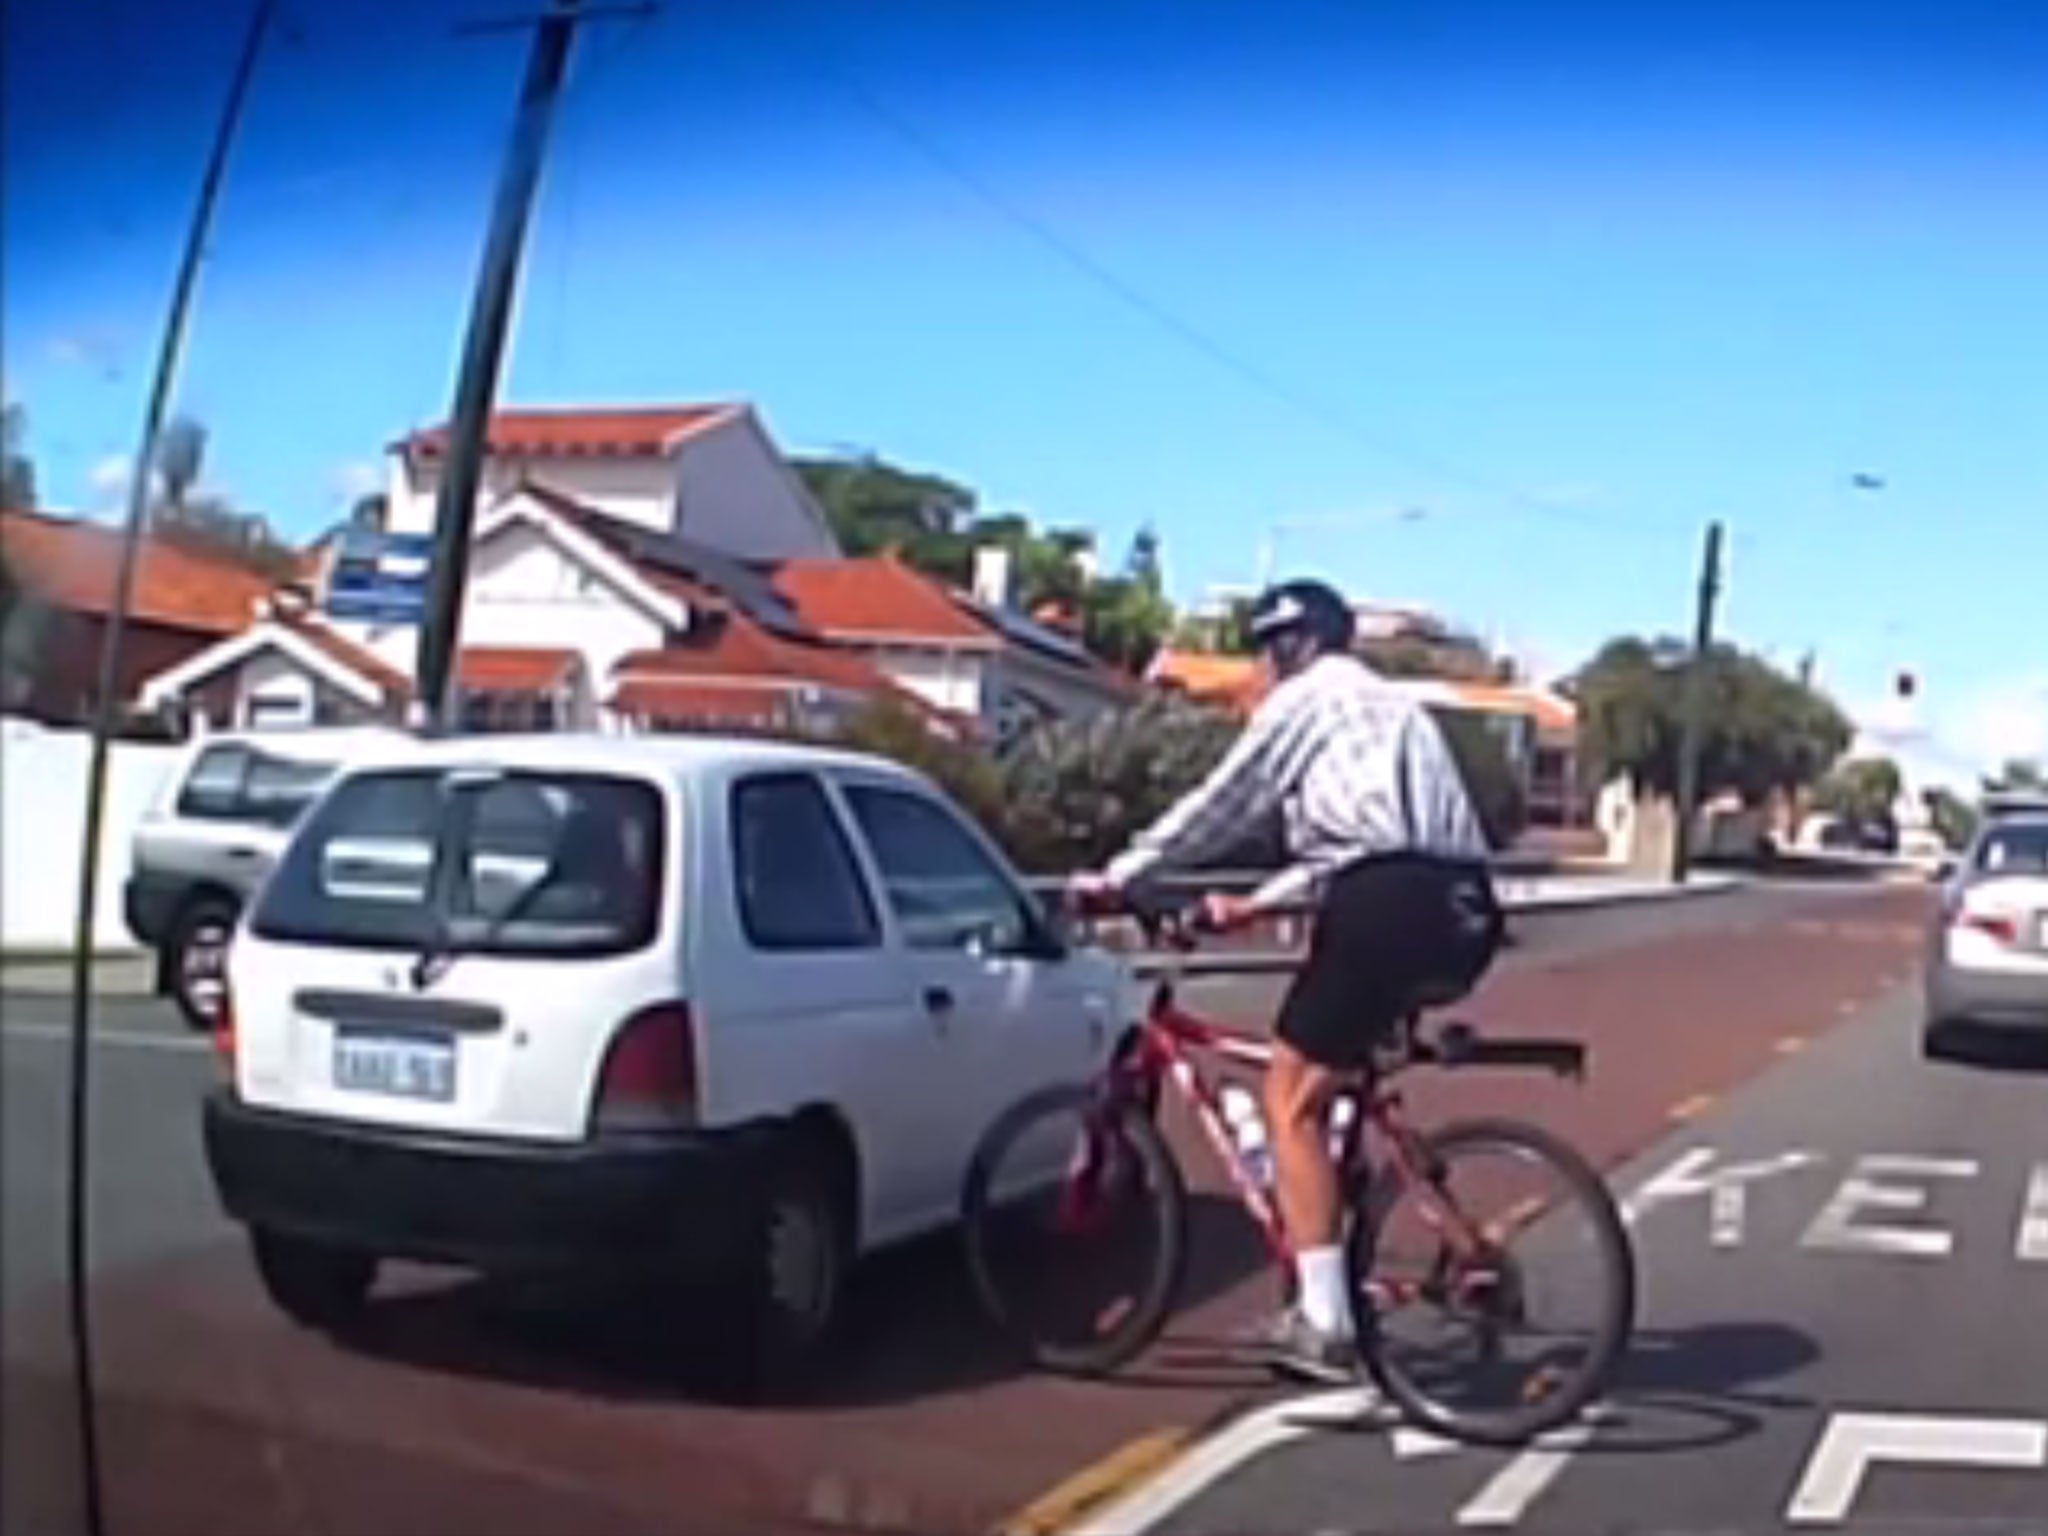 Watch a cyclist's near-miss with a car in Australia.